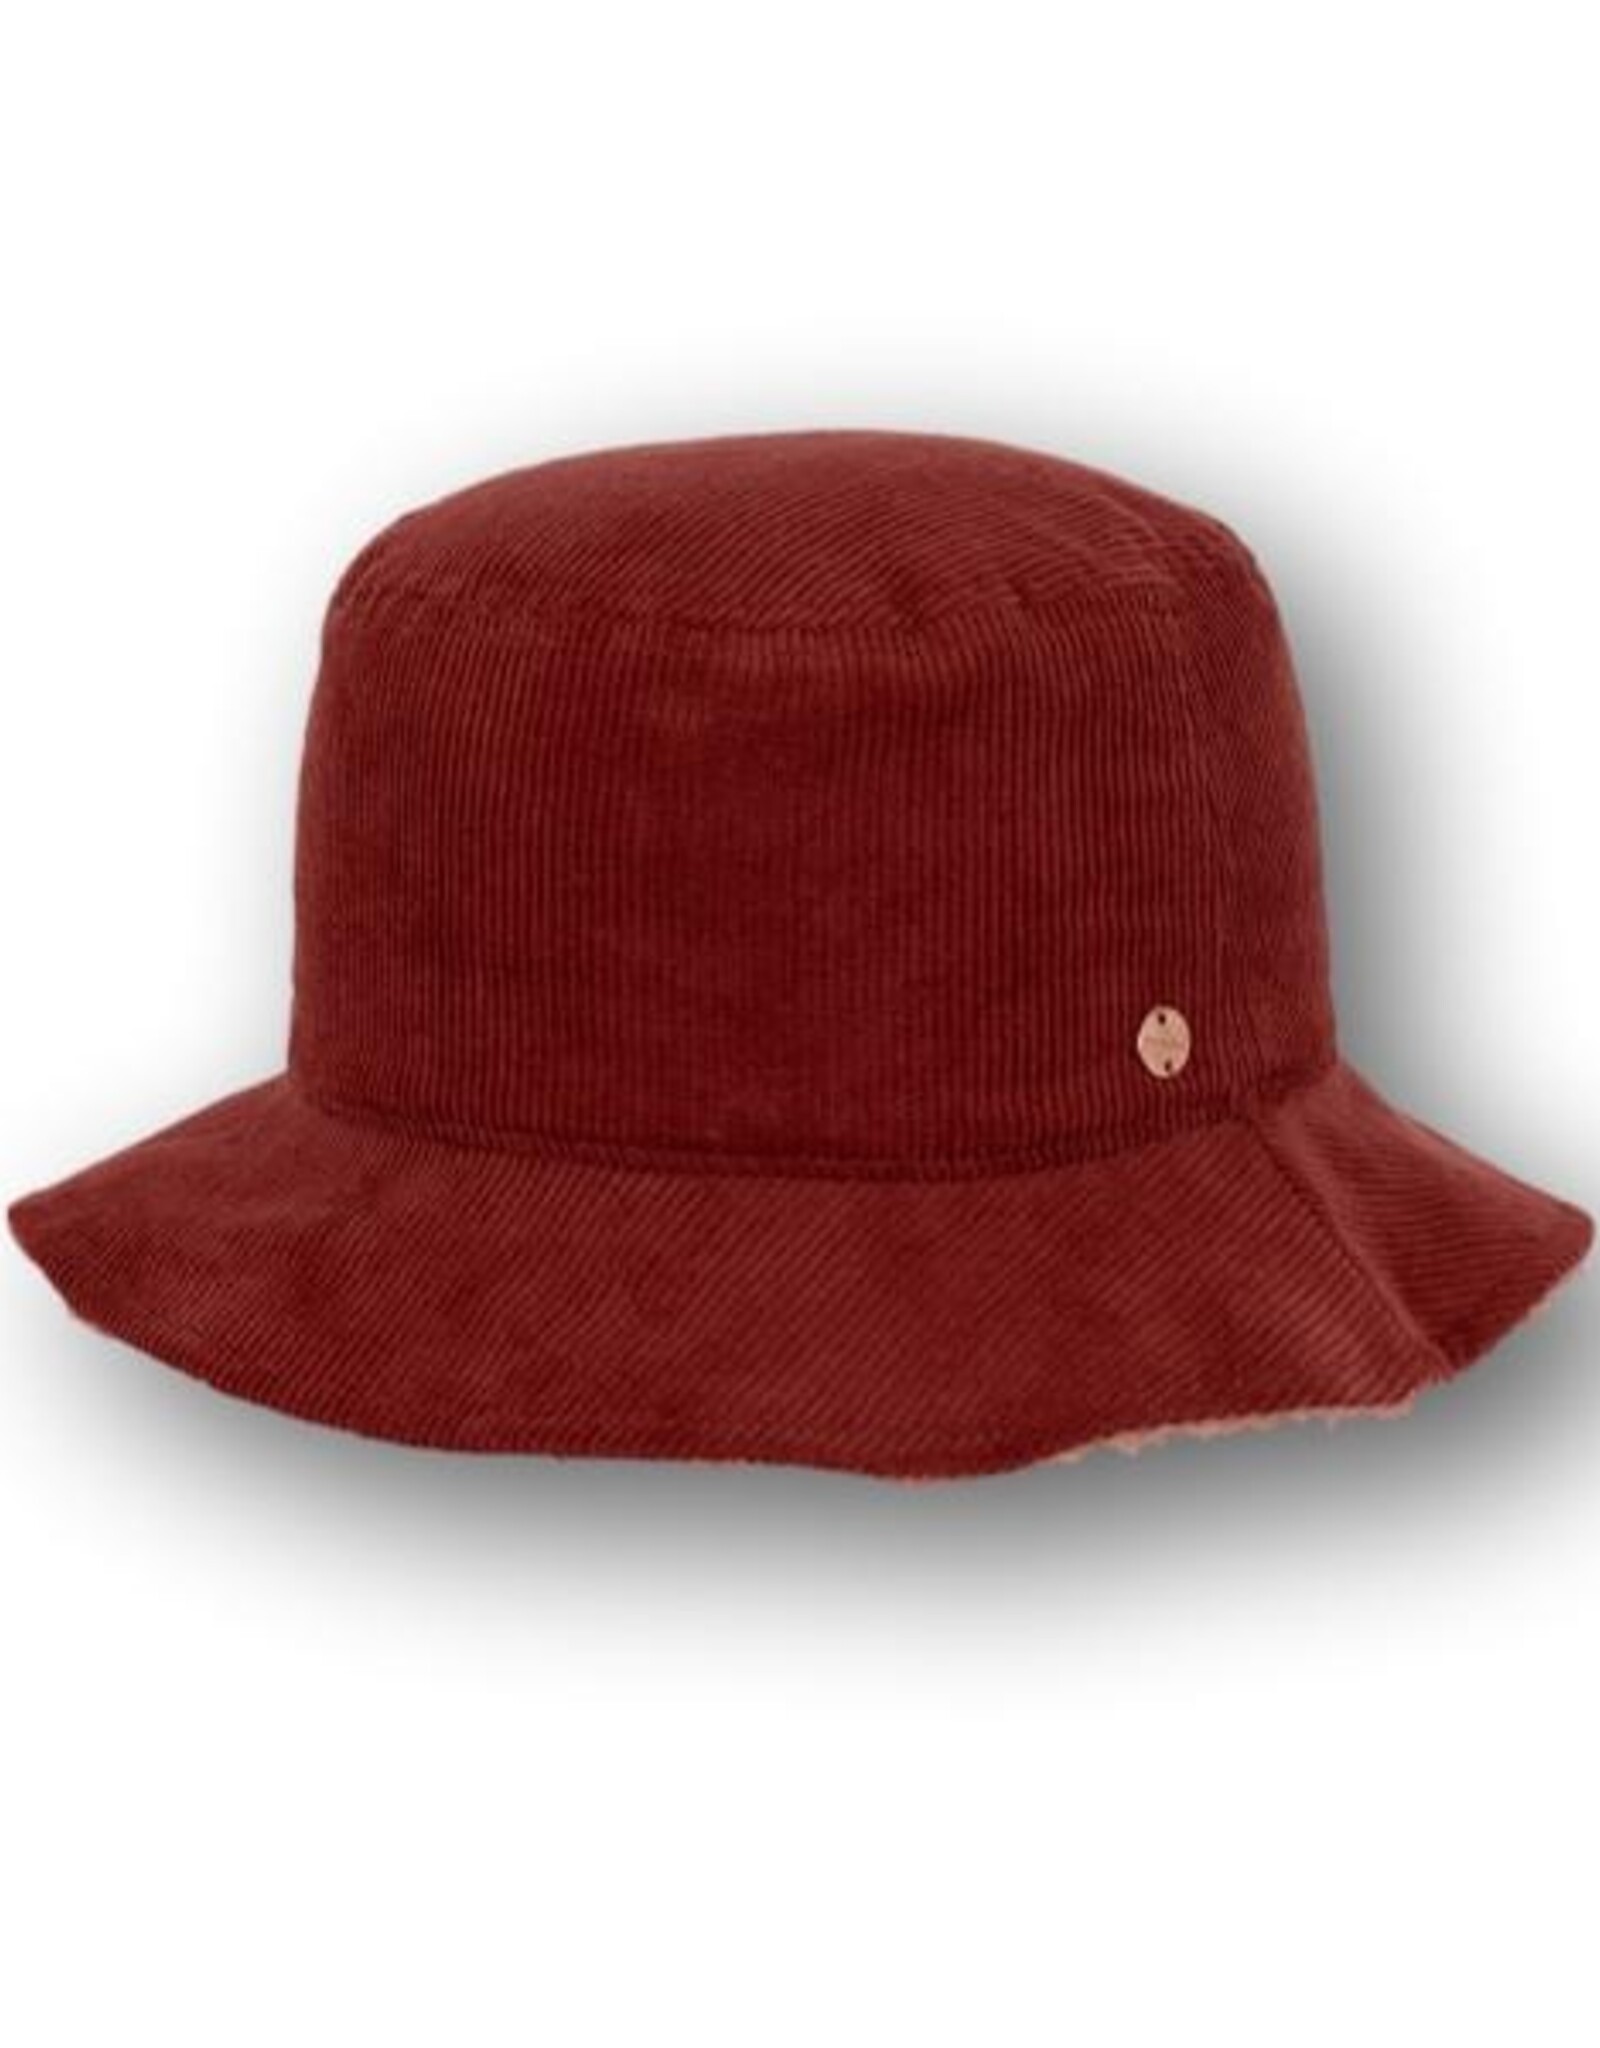 KOORINGAL Coogee Bucket Hat, Berry, Large